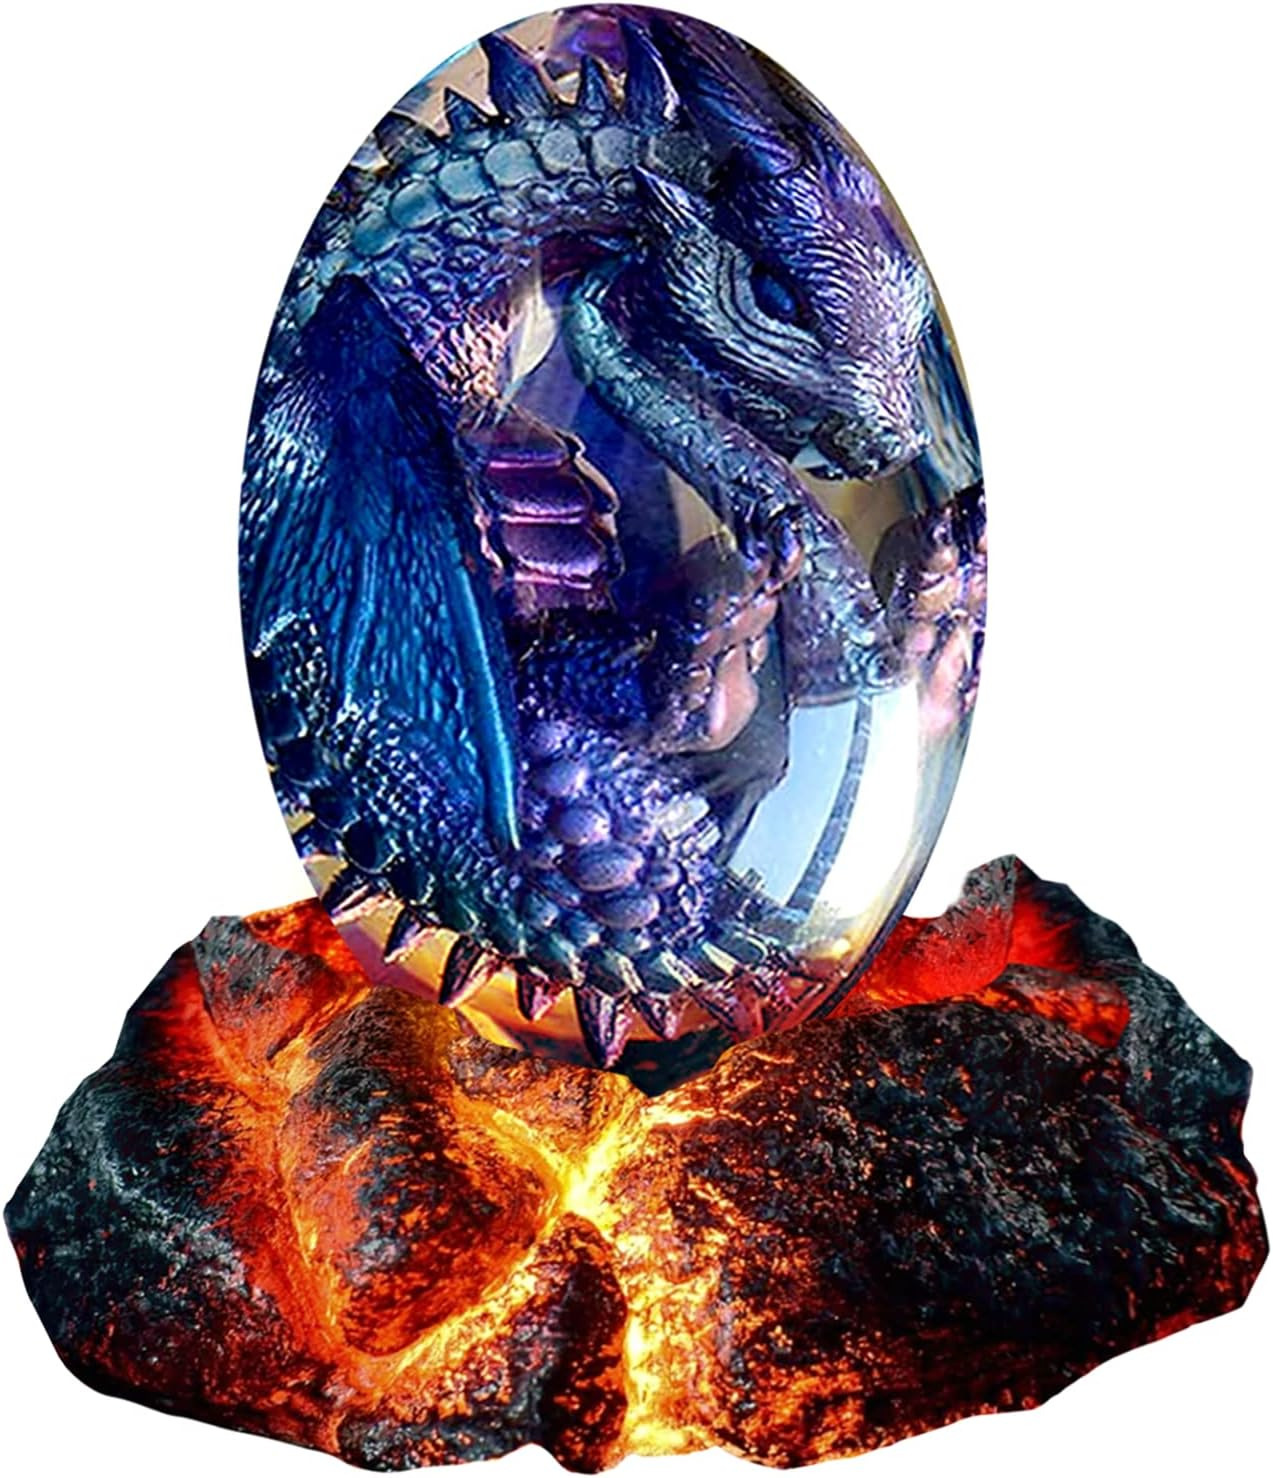 Dragons Egg, Lava Dragon Egg with Luminous Base, Handmade Sculpture Dragon Eggs 